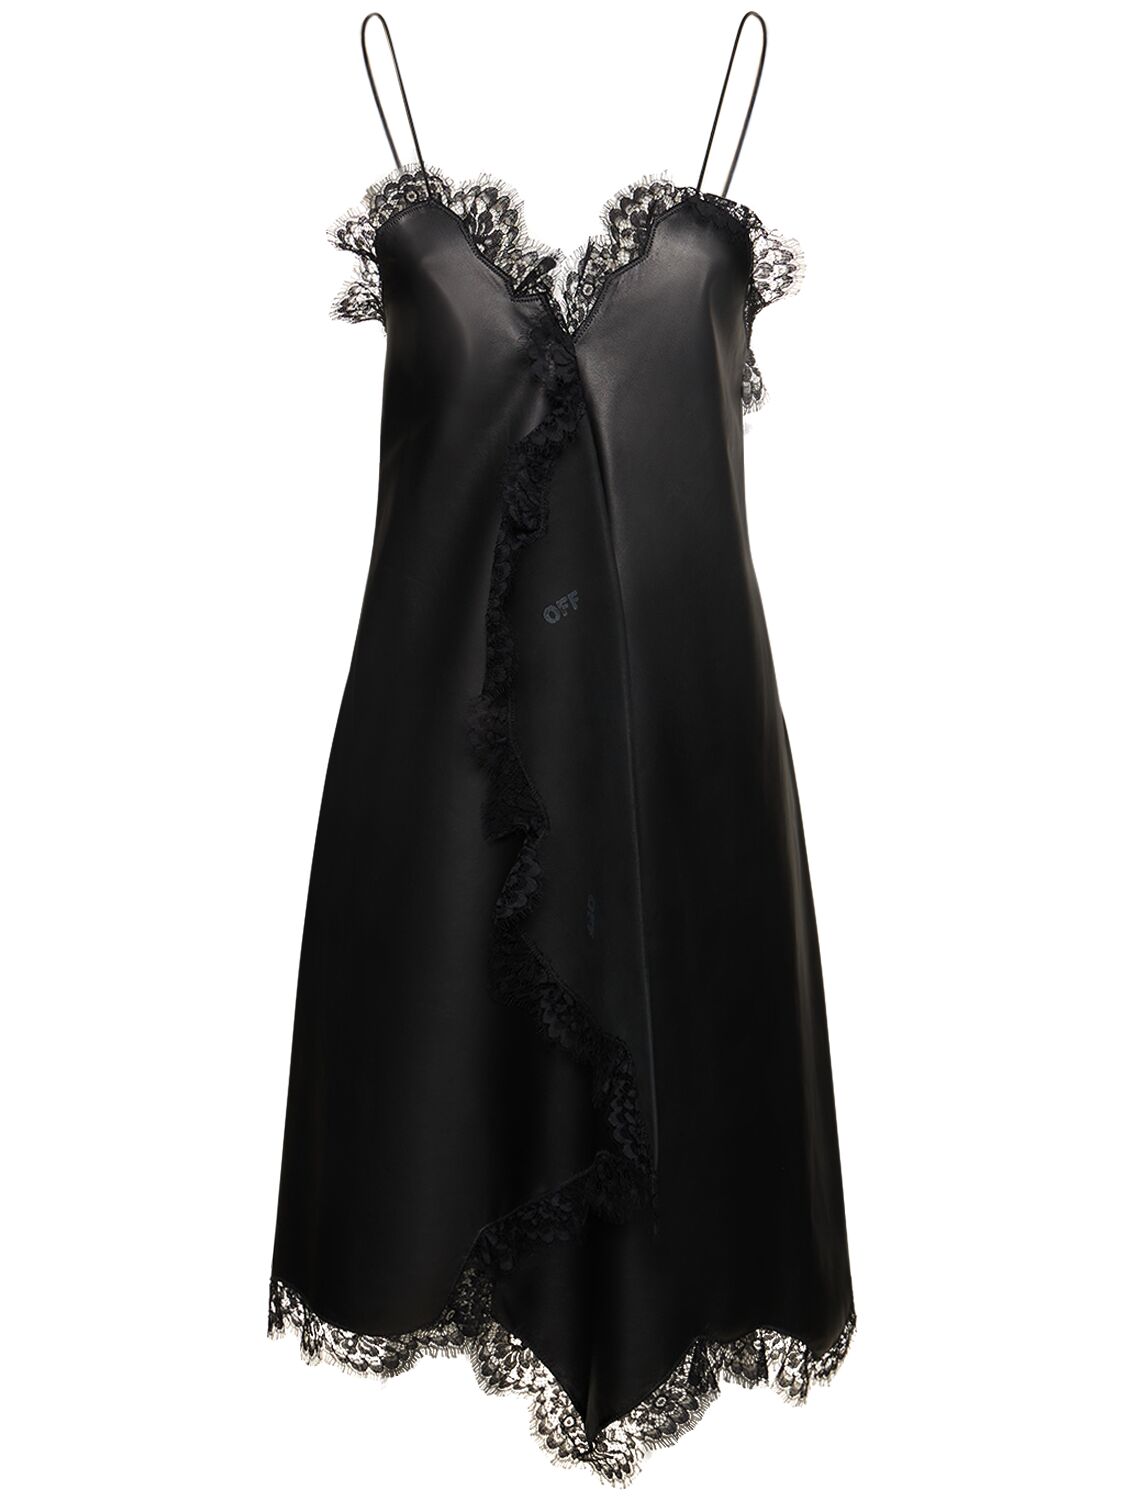 Image of Lace Nappa Leather Dress